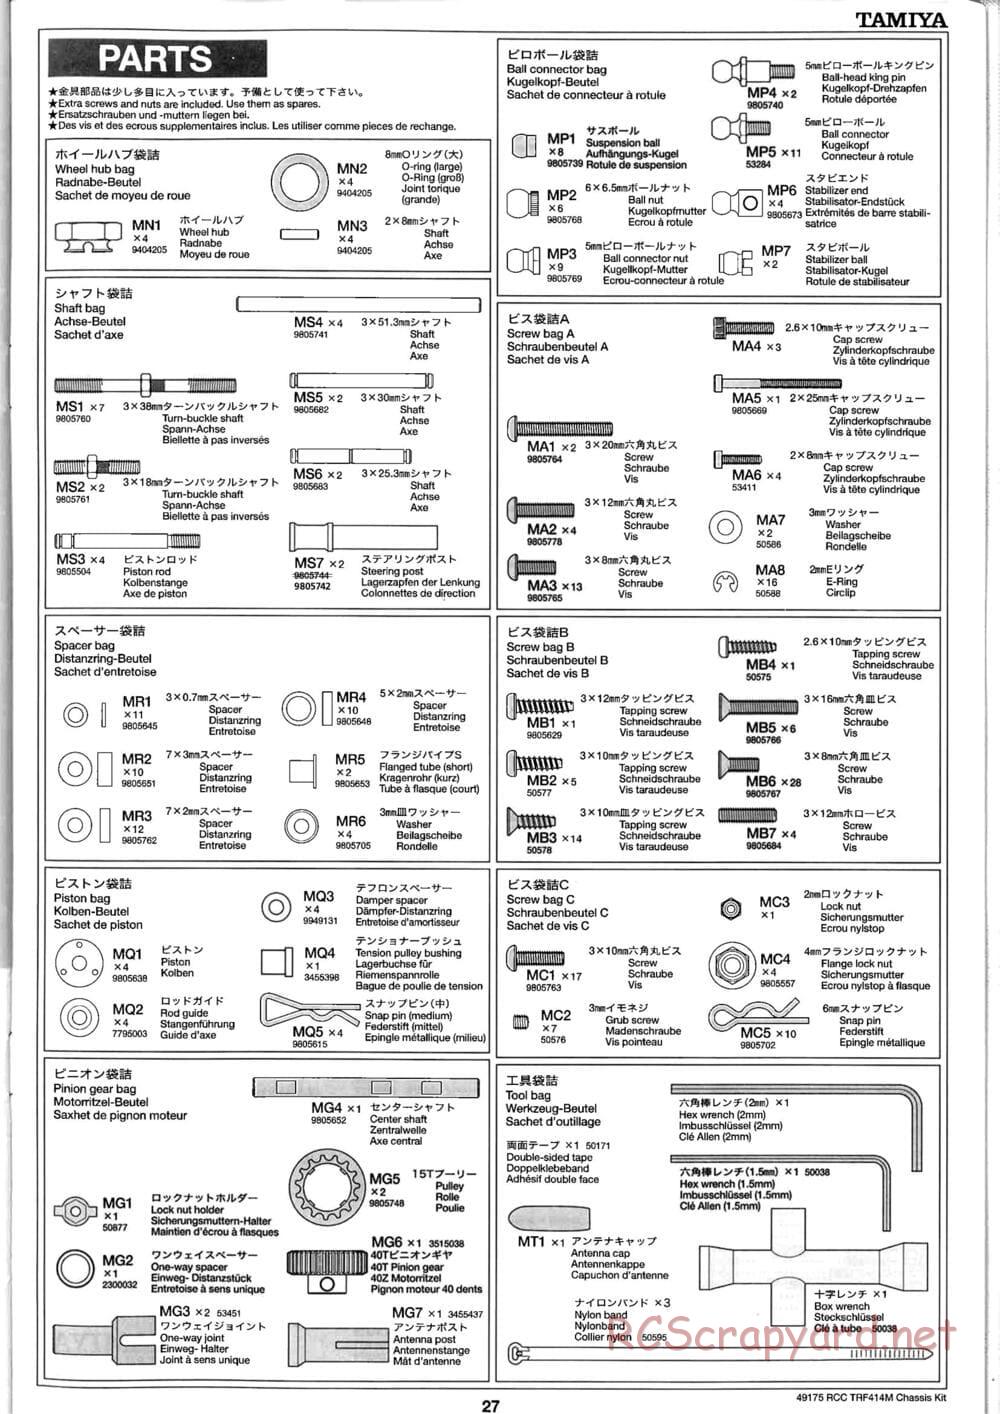 Tamiya - TRF414M Chassis - Manual - Page 27